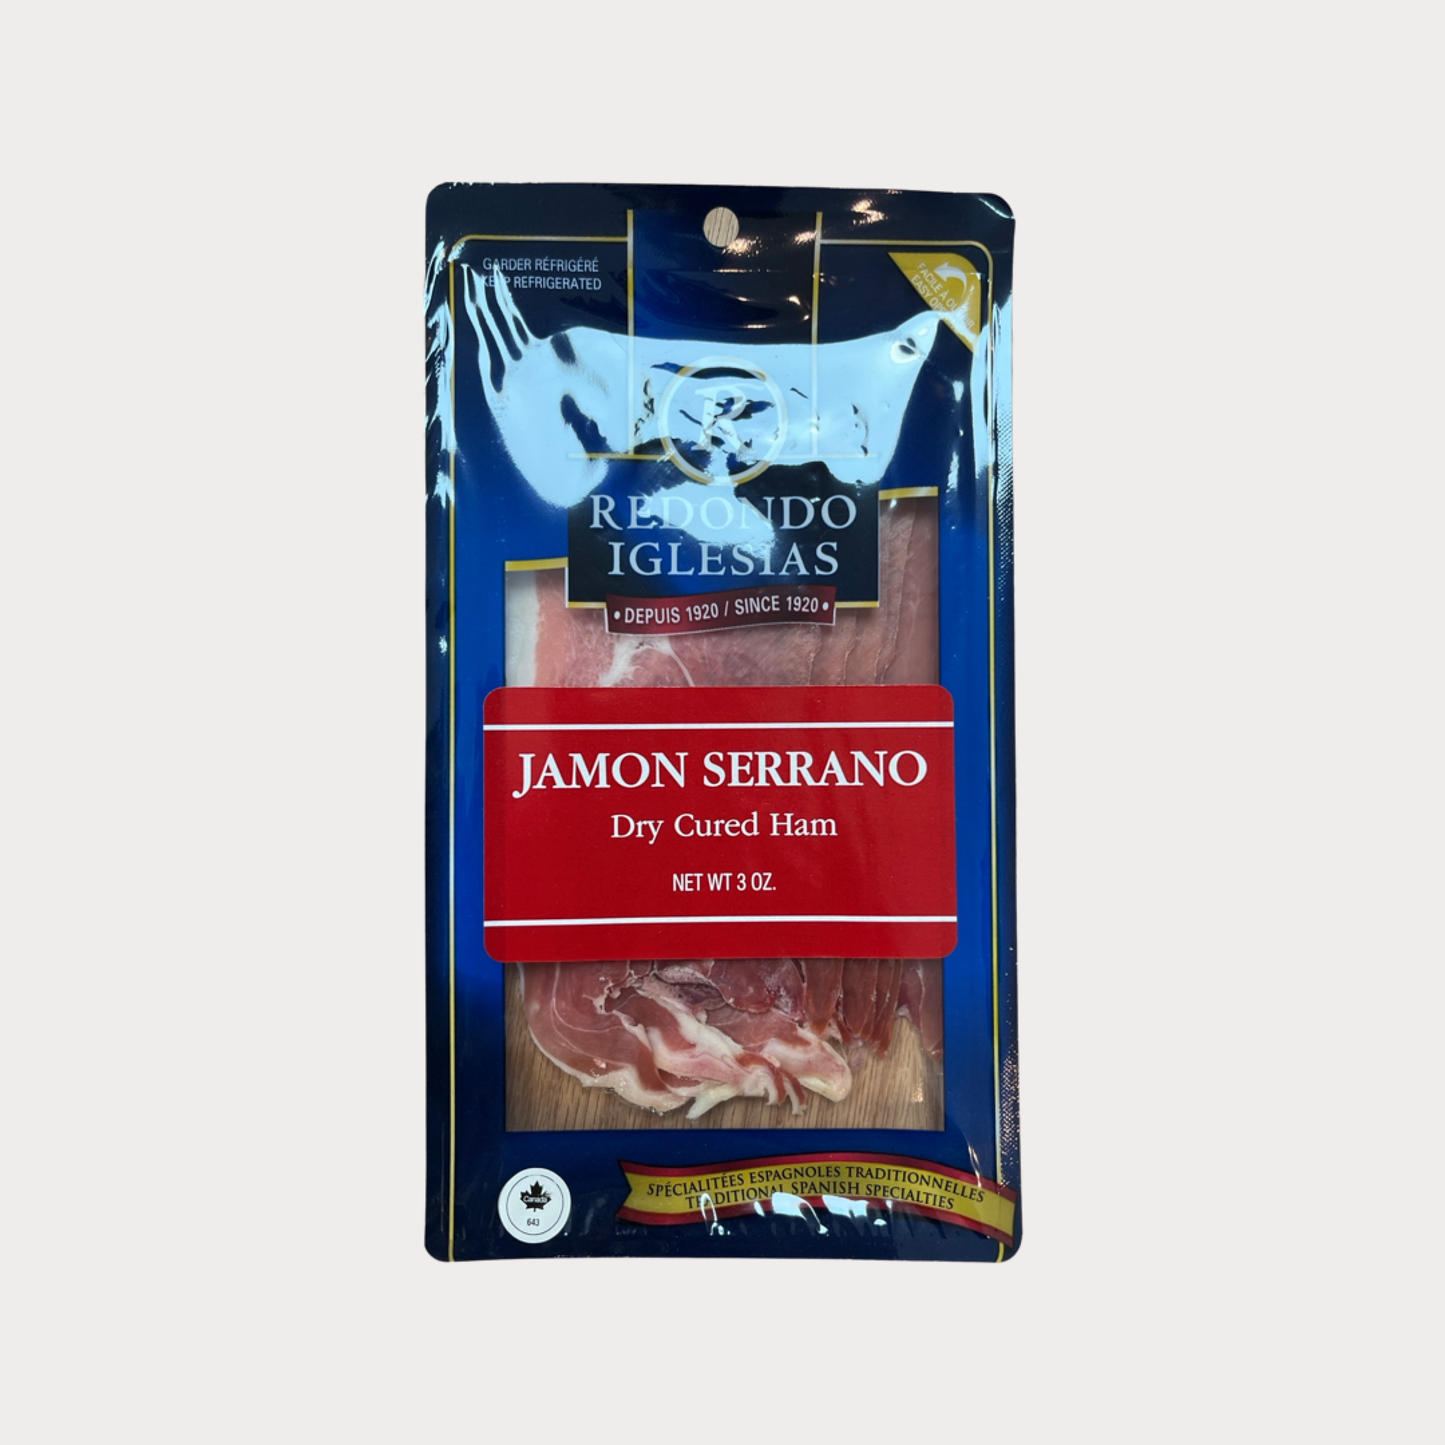 Redondo Iglesias Jamon Serrano